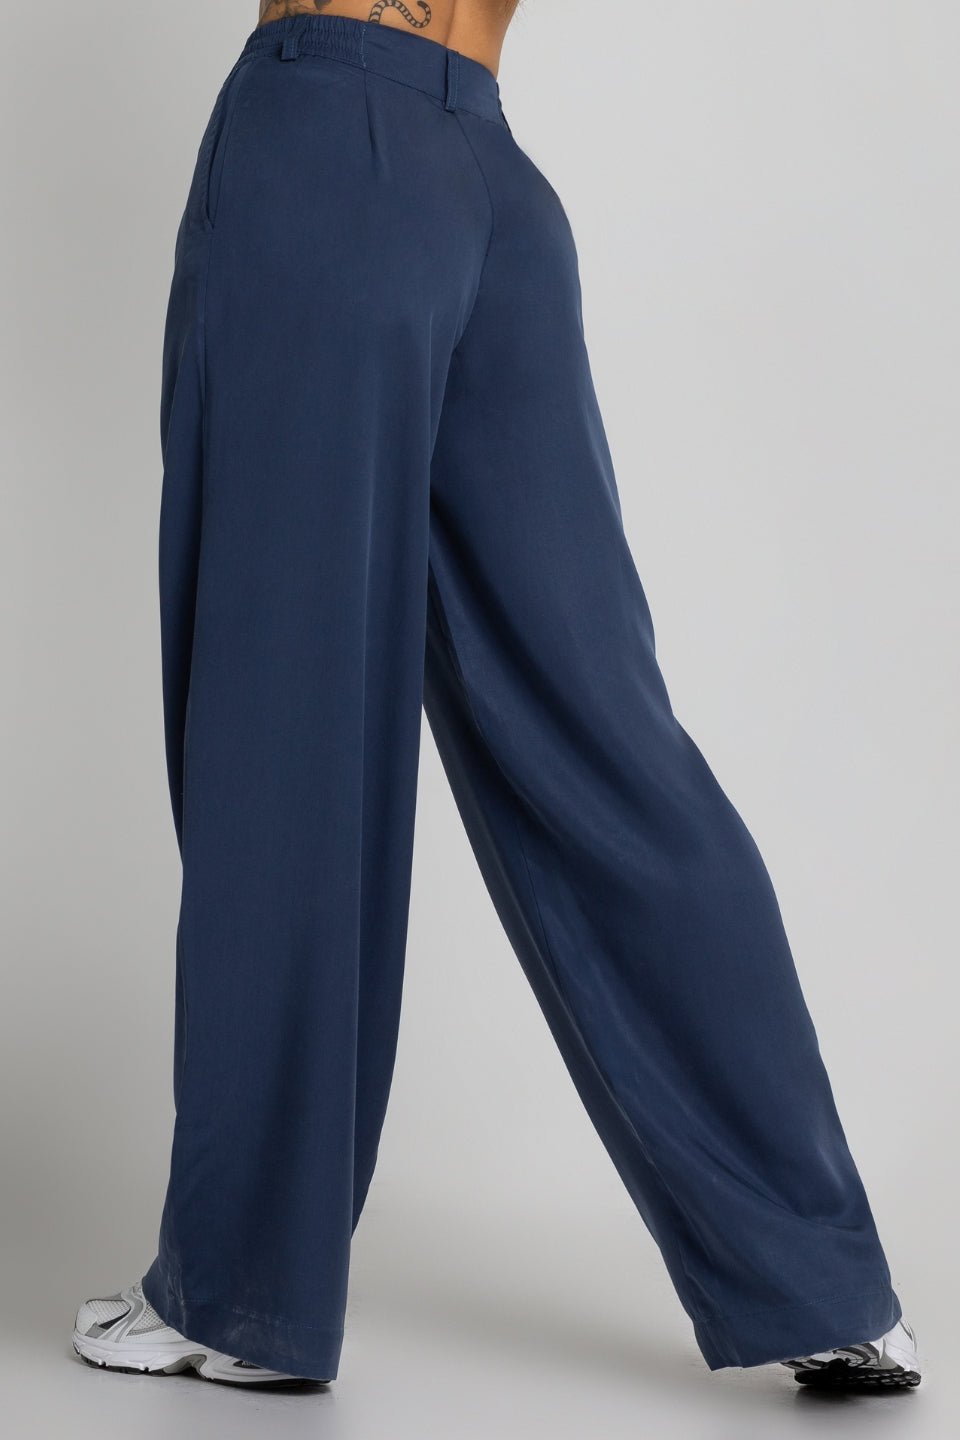 Spodnie garniturowe damskie GARCON TALL - granatowy - Chiara Wear